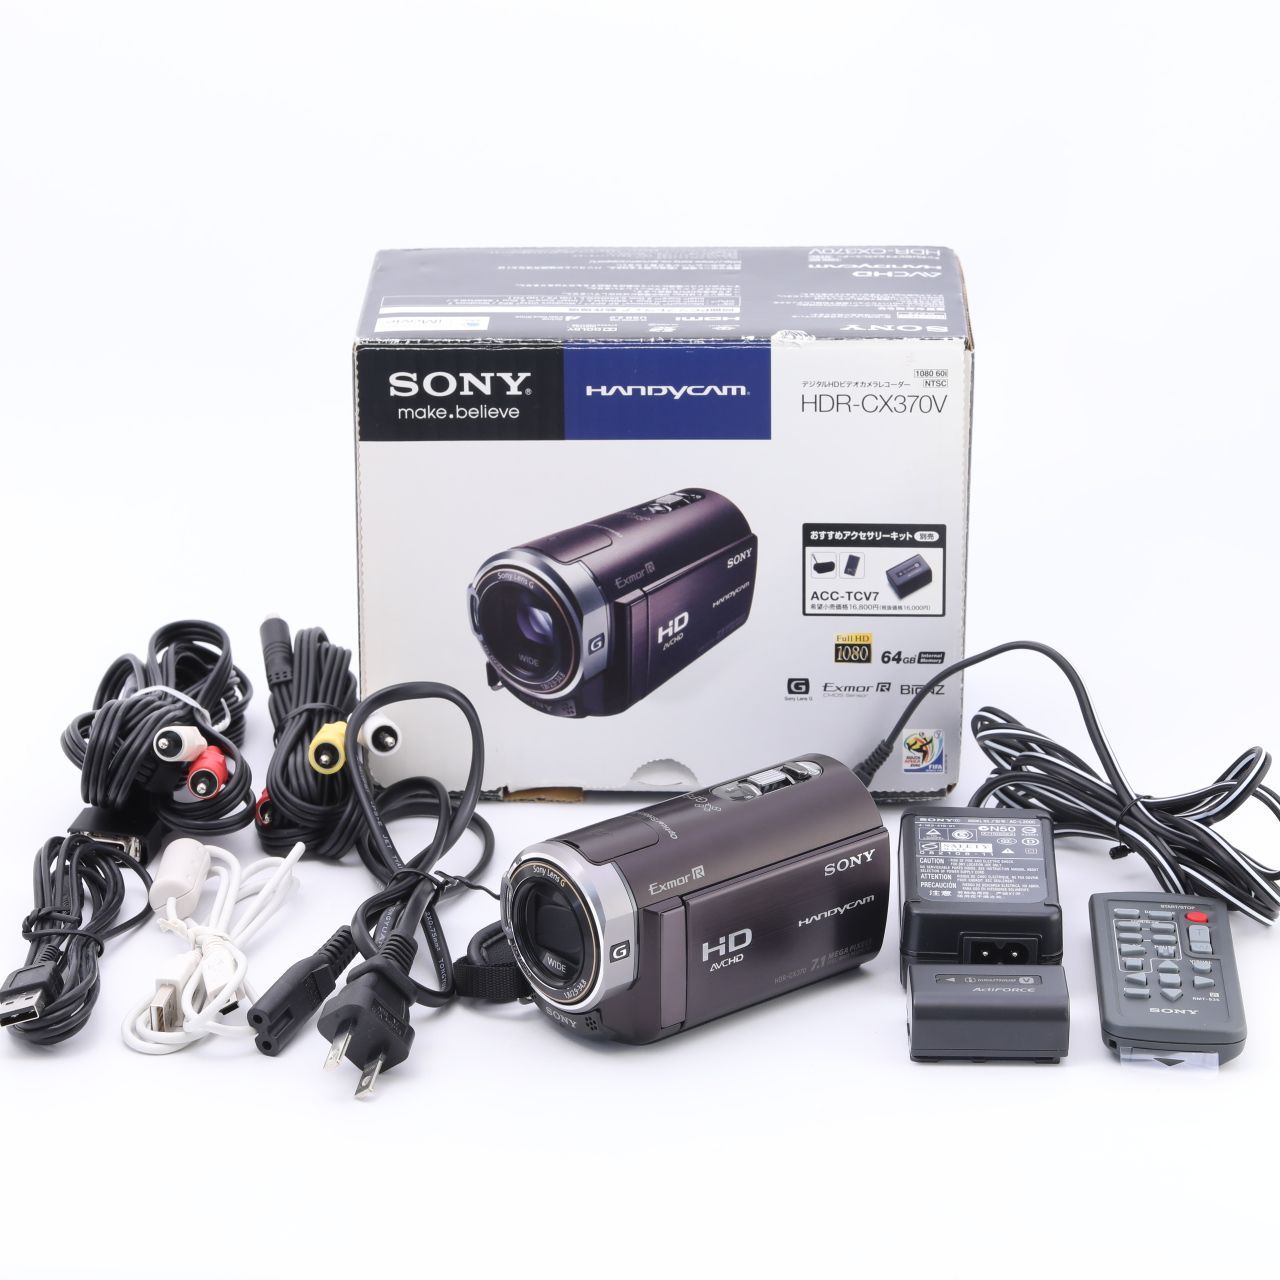 SONY デジタルHDビデオカメラ CX370V HDR-CX370V/T カメラ本舗｜Camera honpo メルカリ